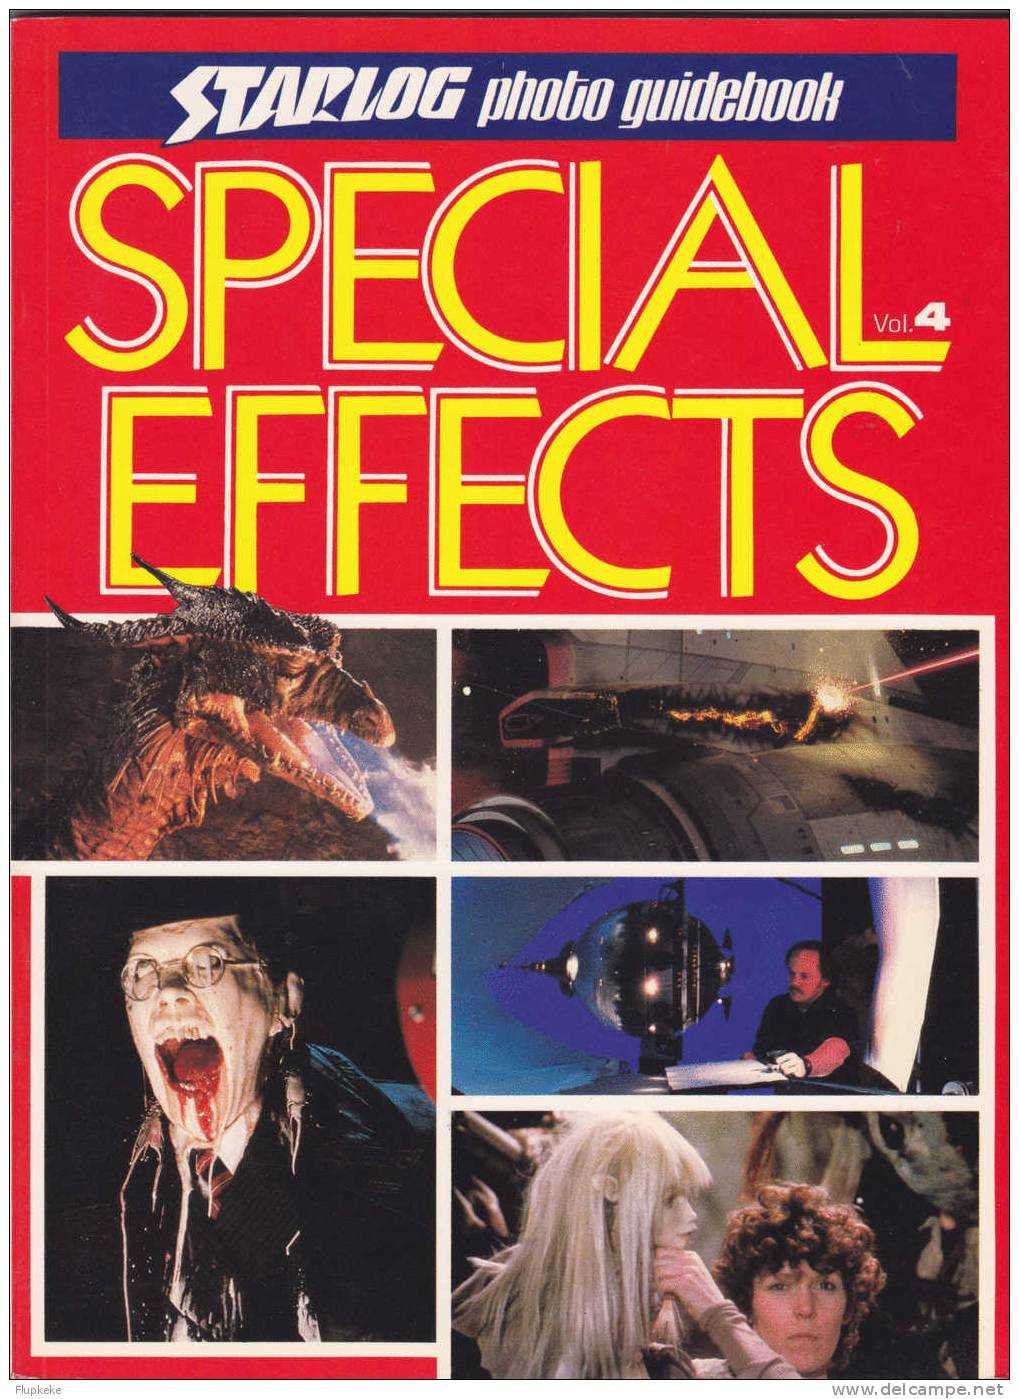 Starlog Photo Guidebook Special Effect Volume 4 David Hutchison Starlog Press - Divertissement